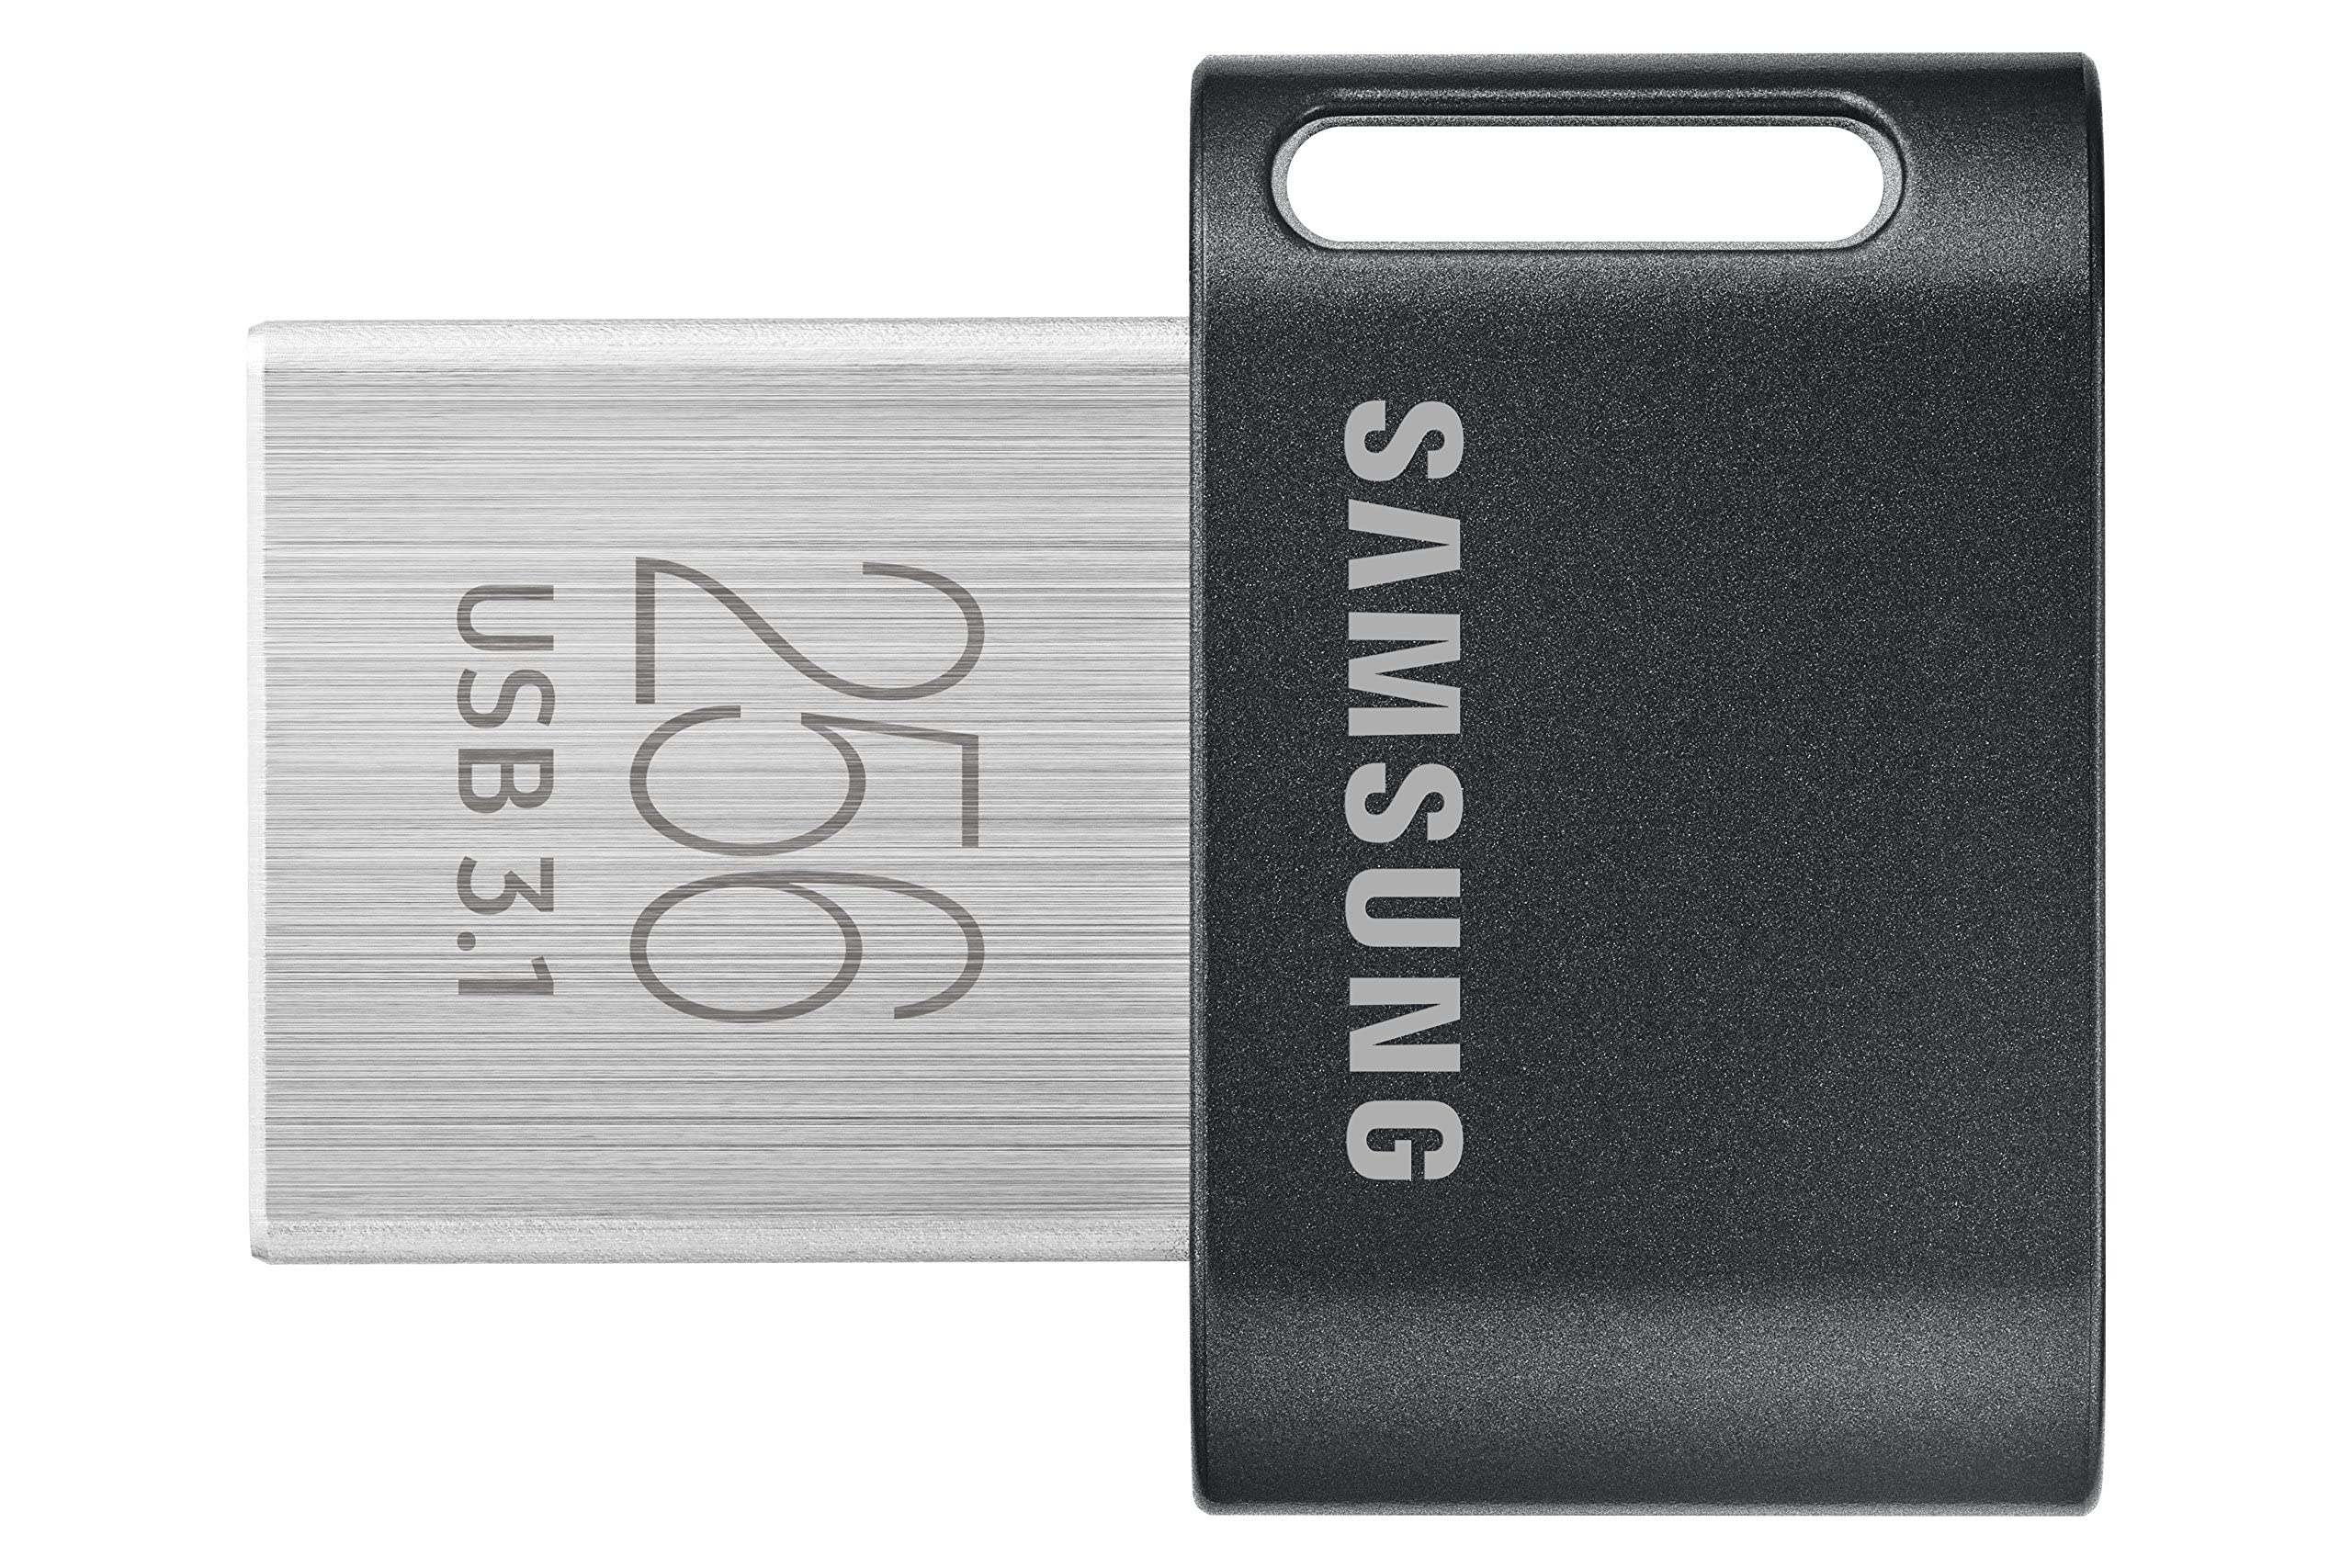 256GB Samsung FIT Plus USB 3.1 Flash Drive - $21.99 - Amazon